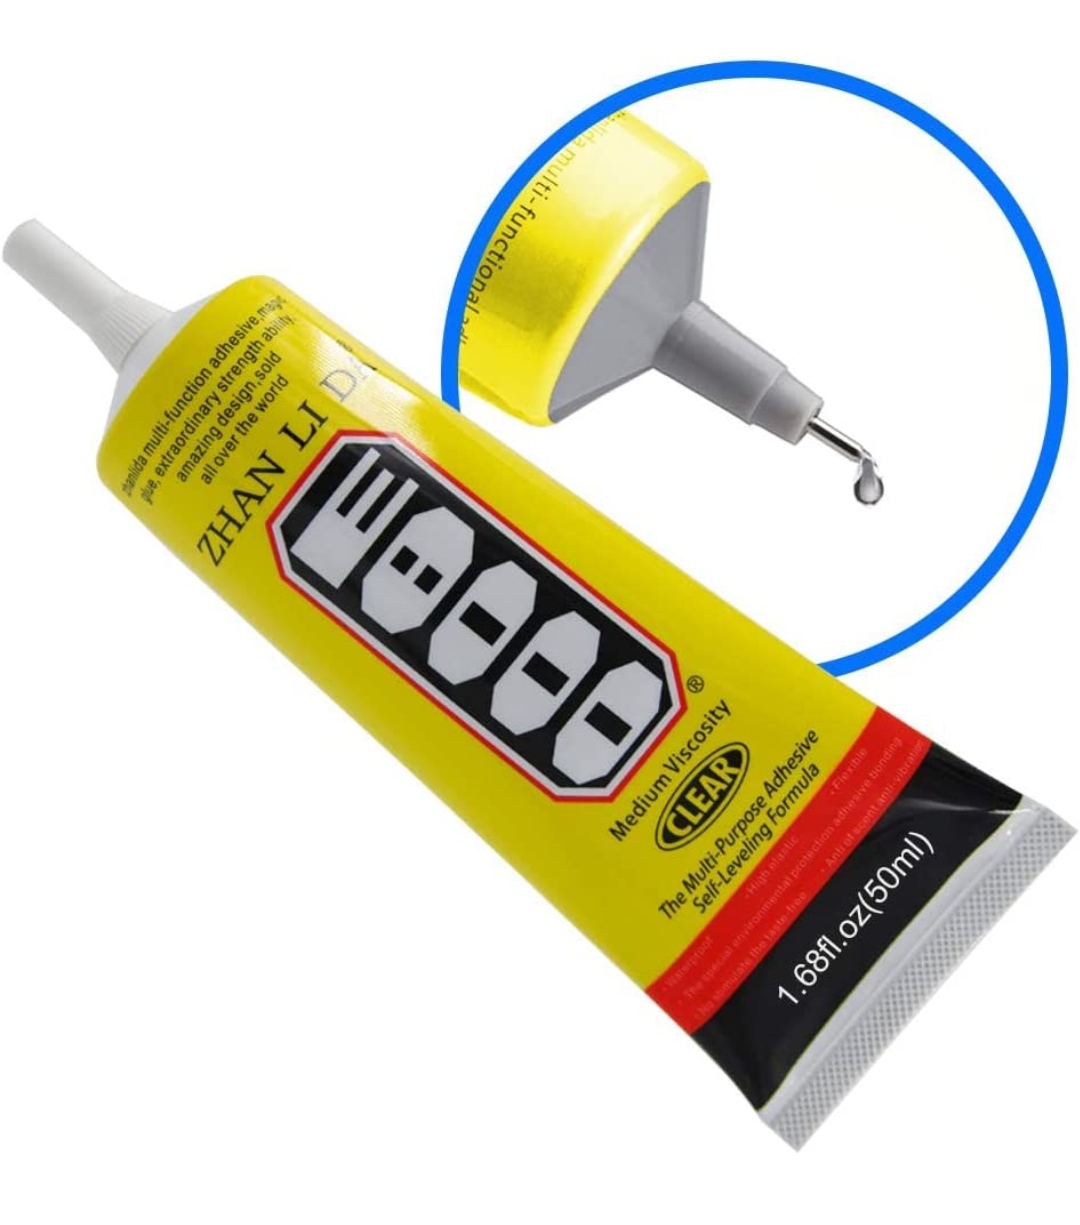 1pc 50ml E8000 Clear Adhesive Glue, Multi-functional And Versatile Repair  Glue